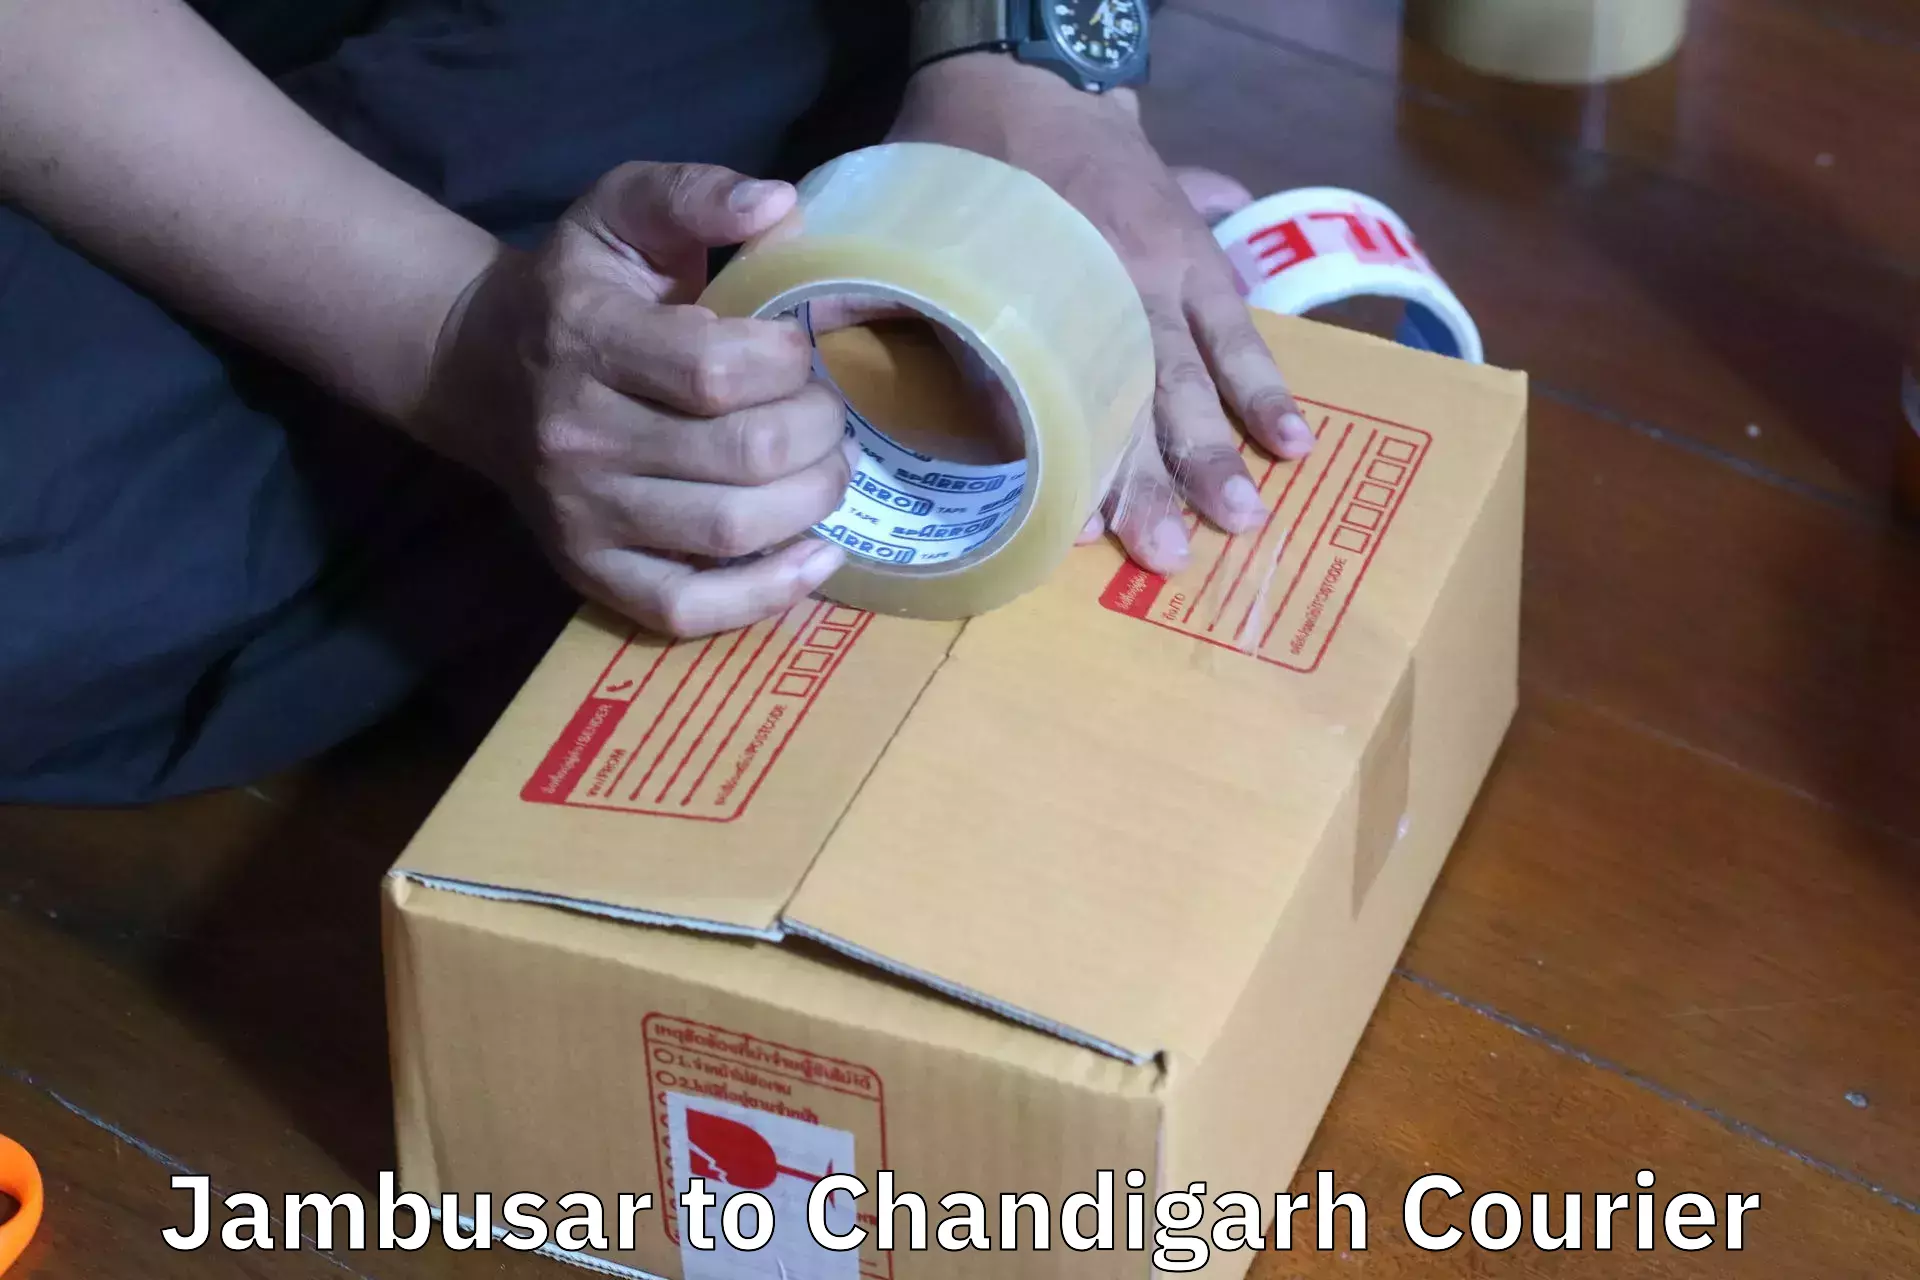 Professional moving company Jambusar to Chandigarh